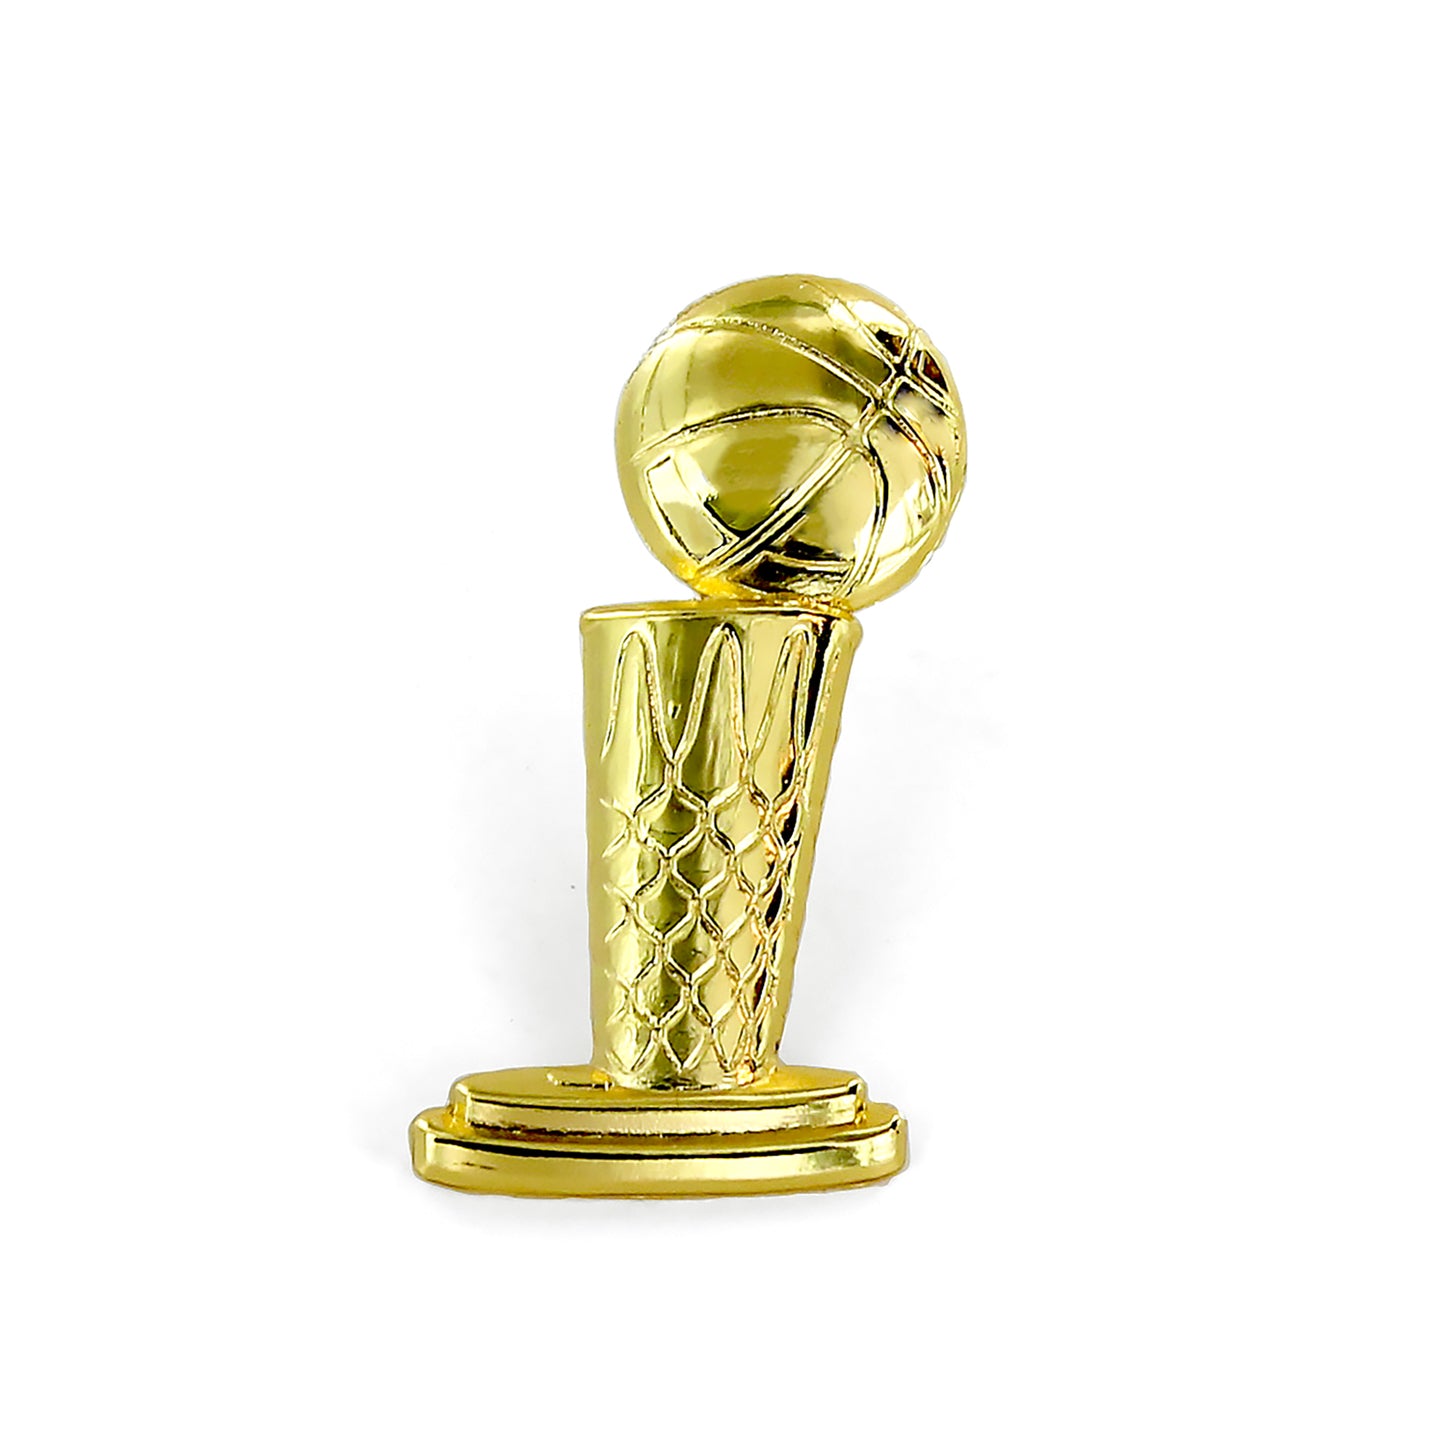 Larry O'Brien Trophy Lapel Pin